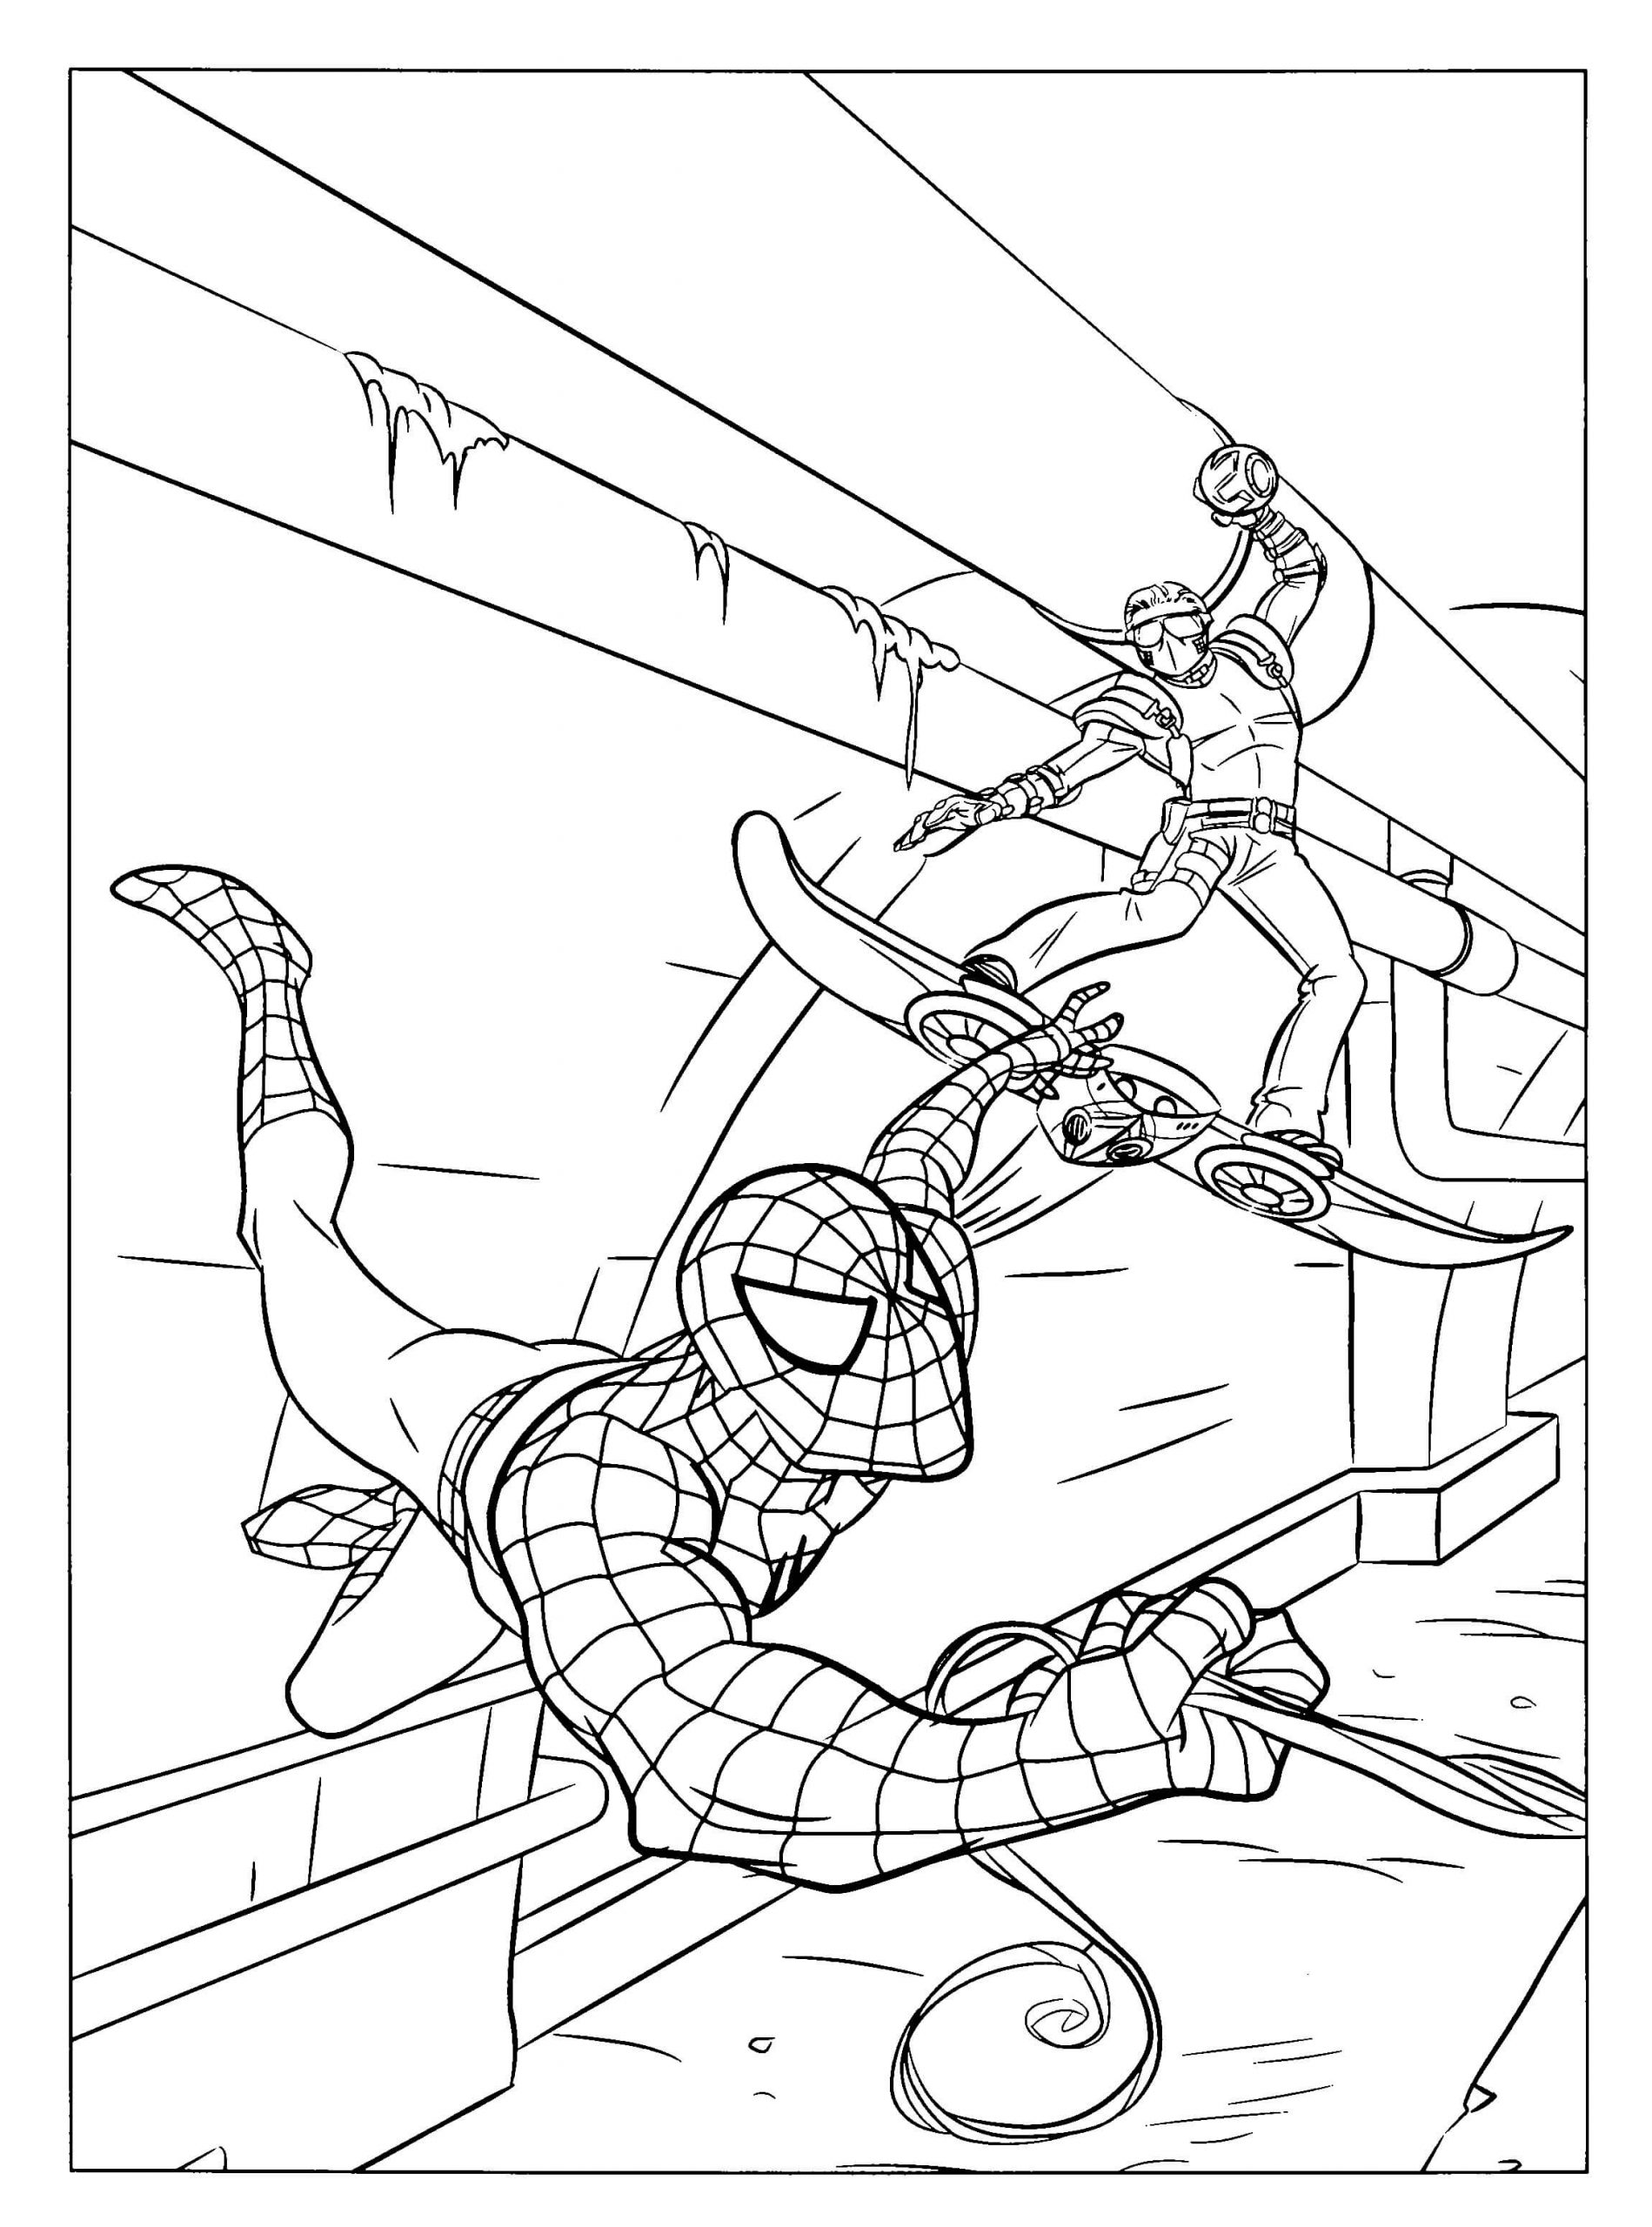 Spiderman et Bouffon Vert coloring page